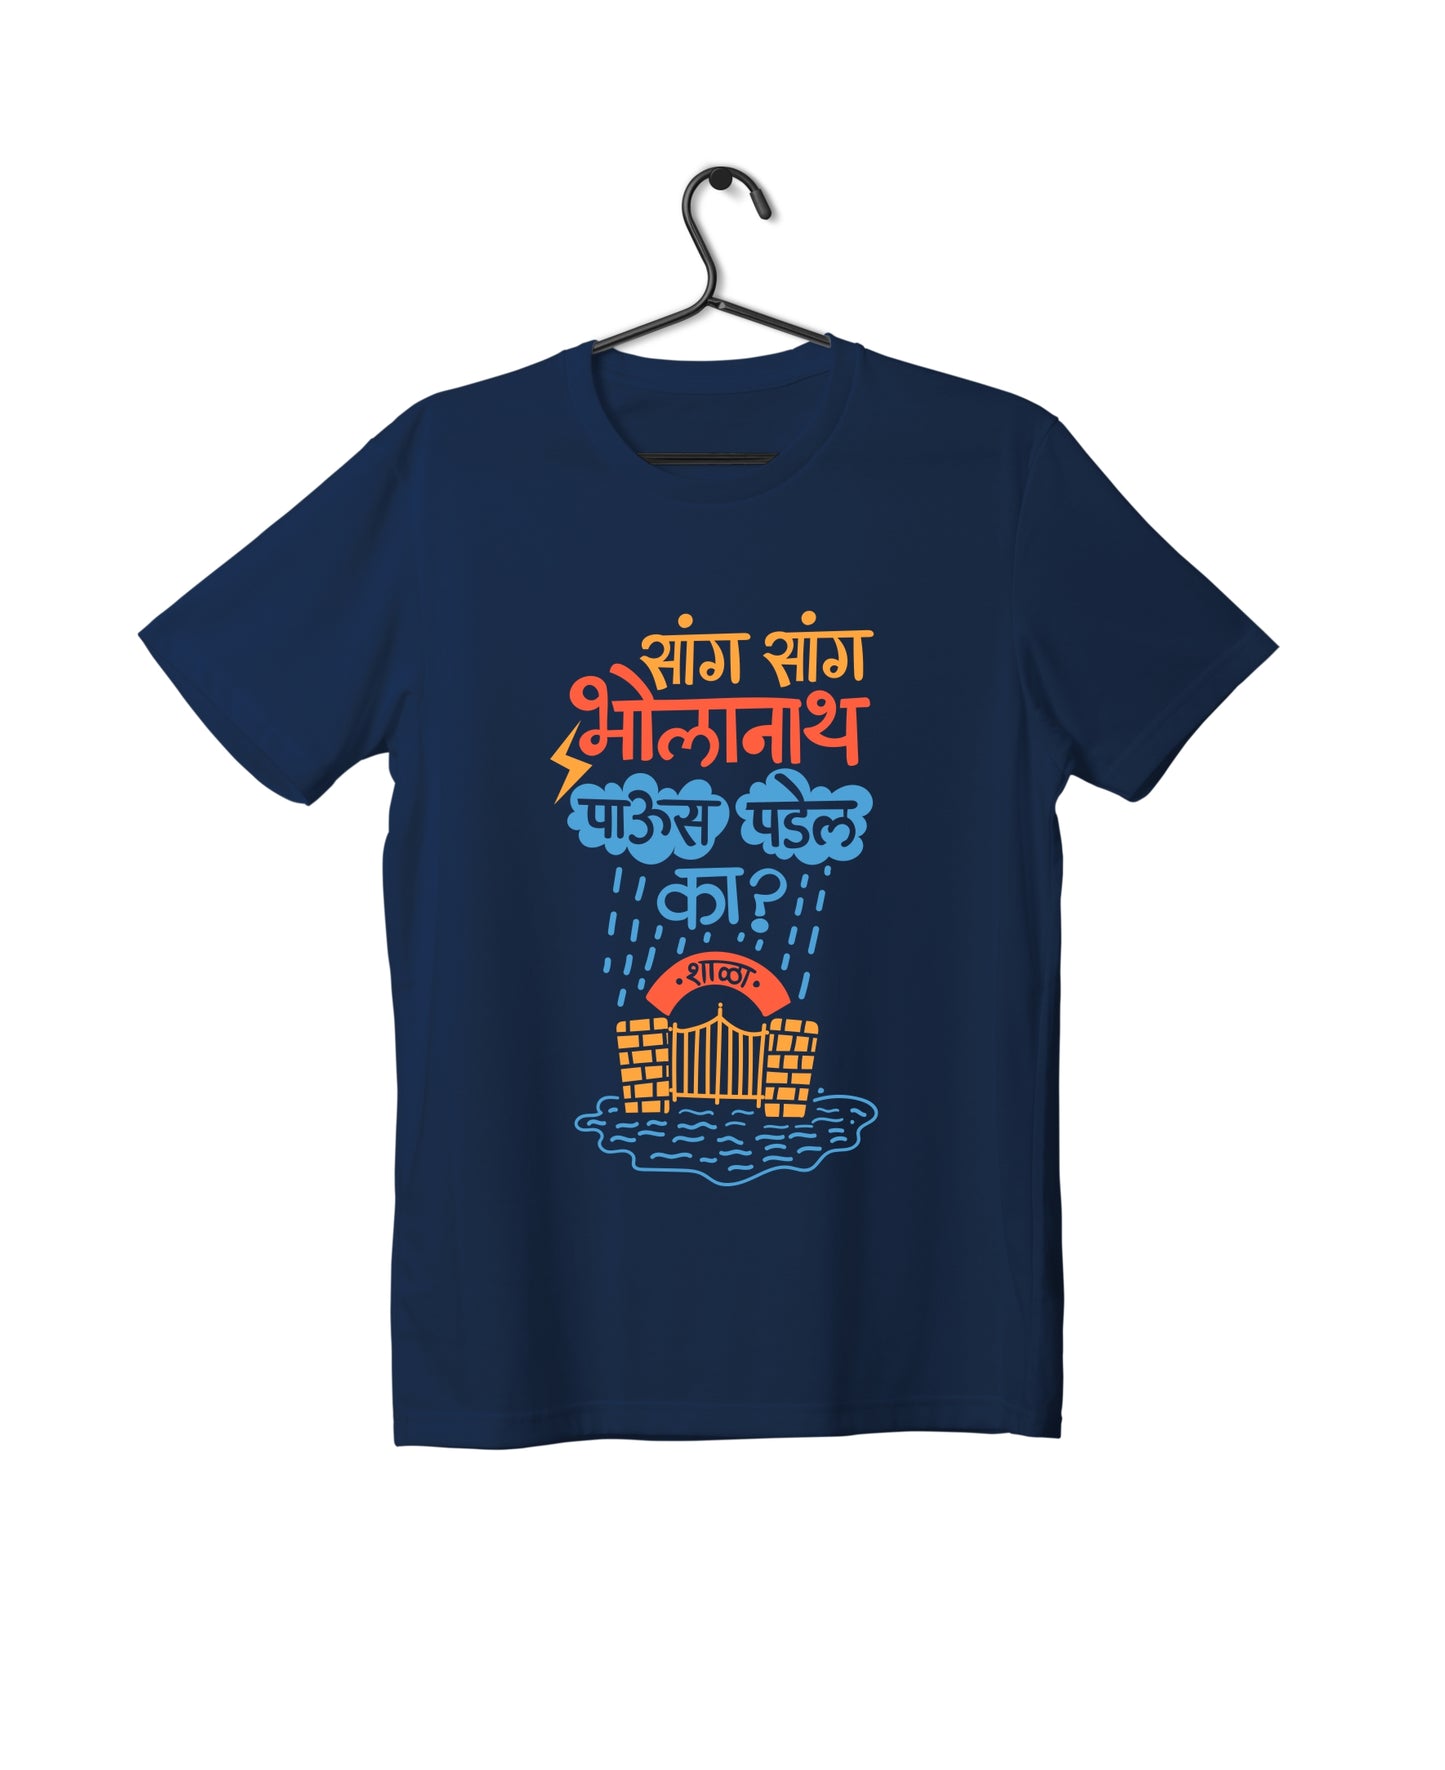 Sang Sang Bholanath - Navy Blue - Unisex Kids T-shirt